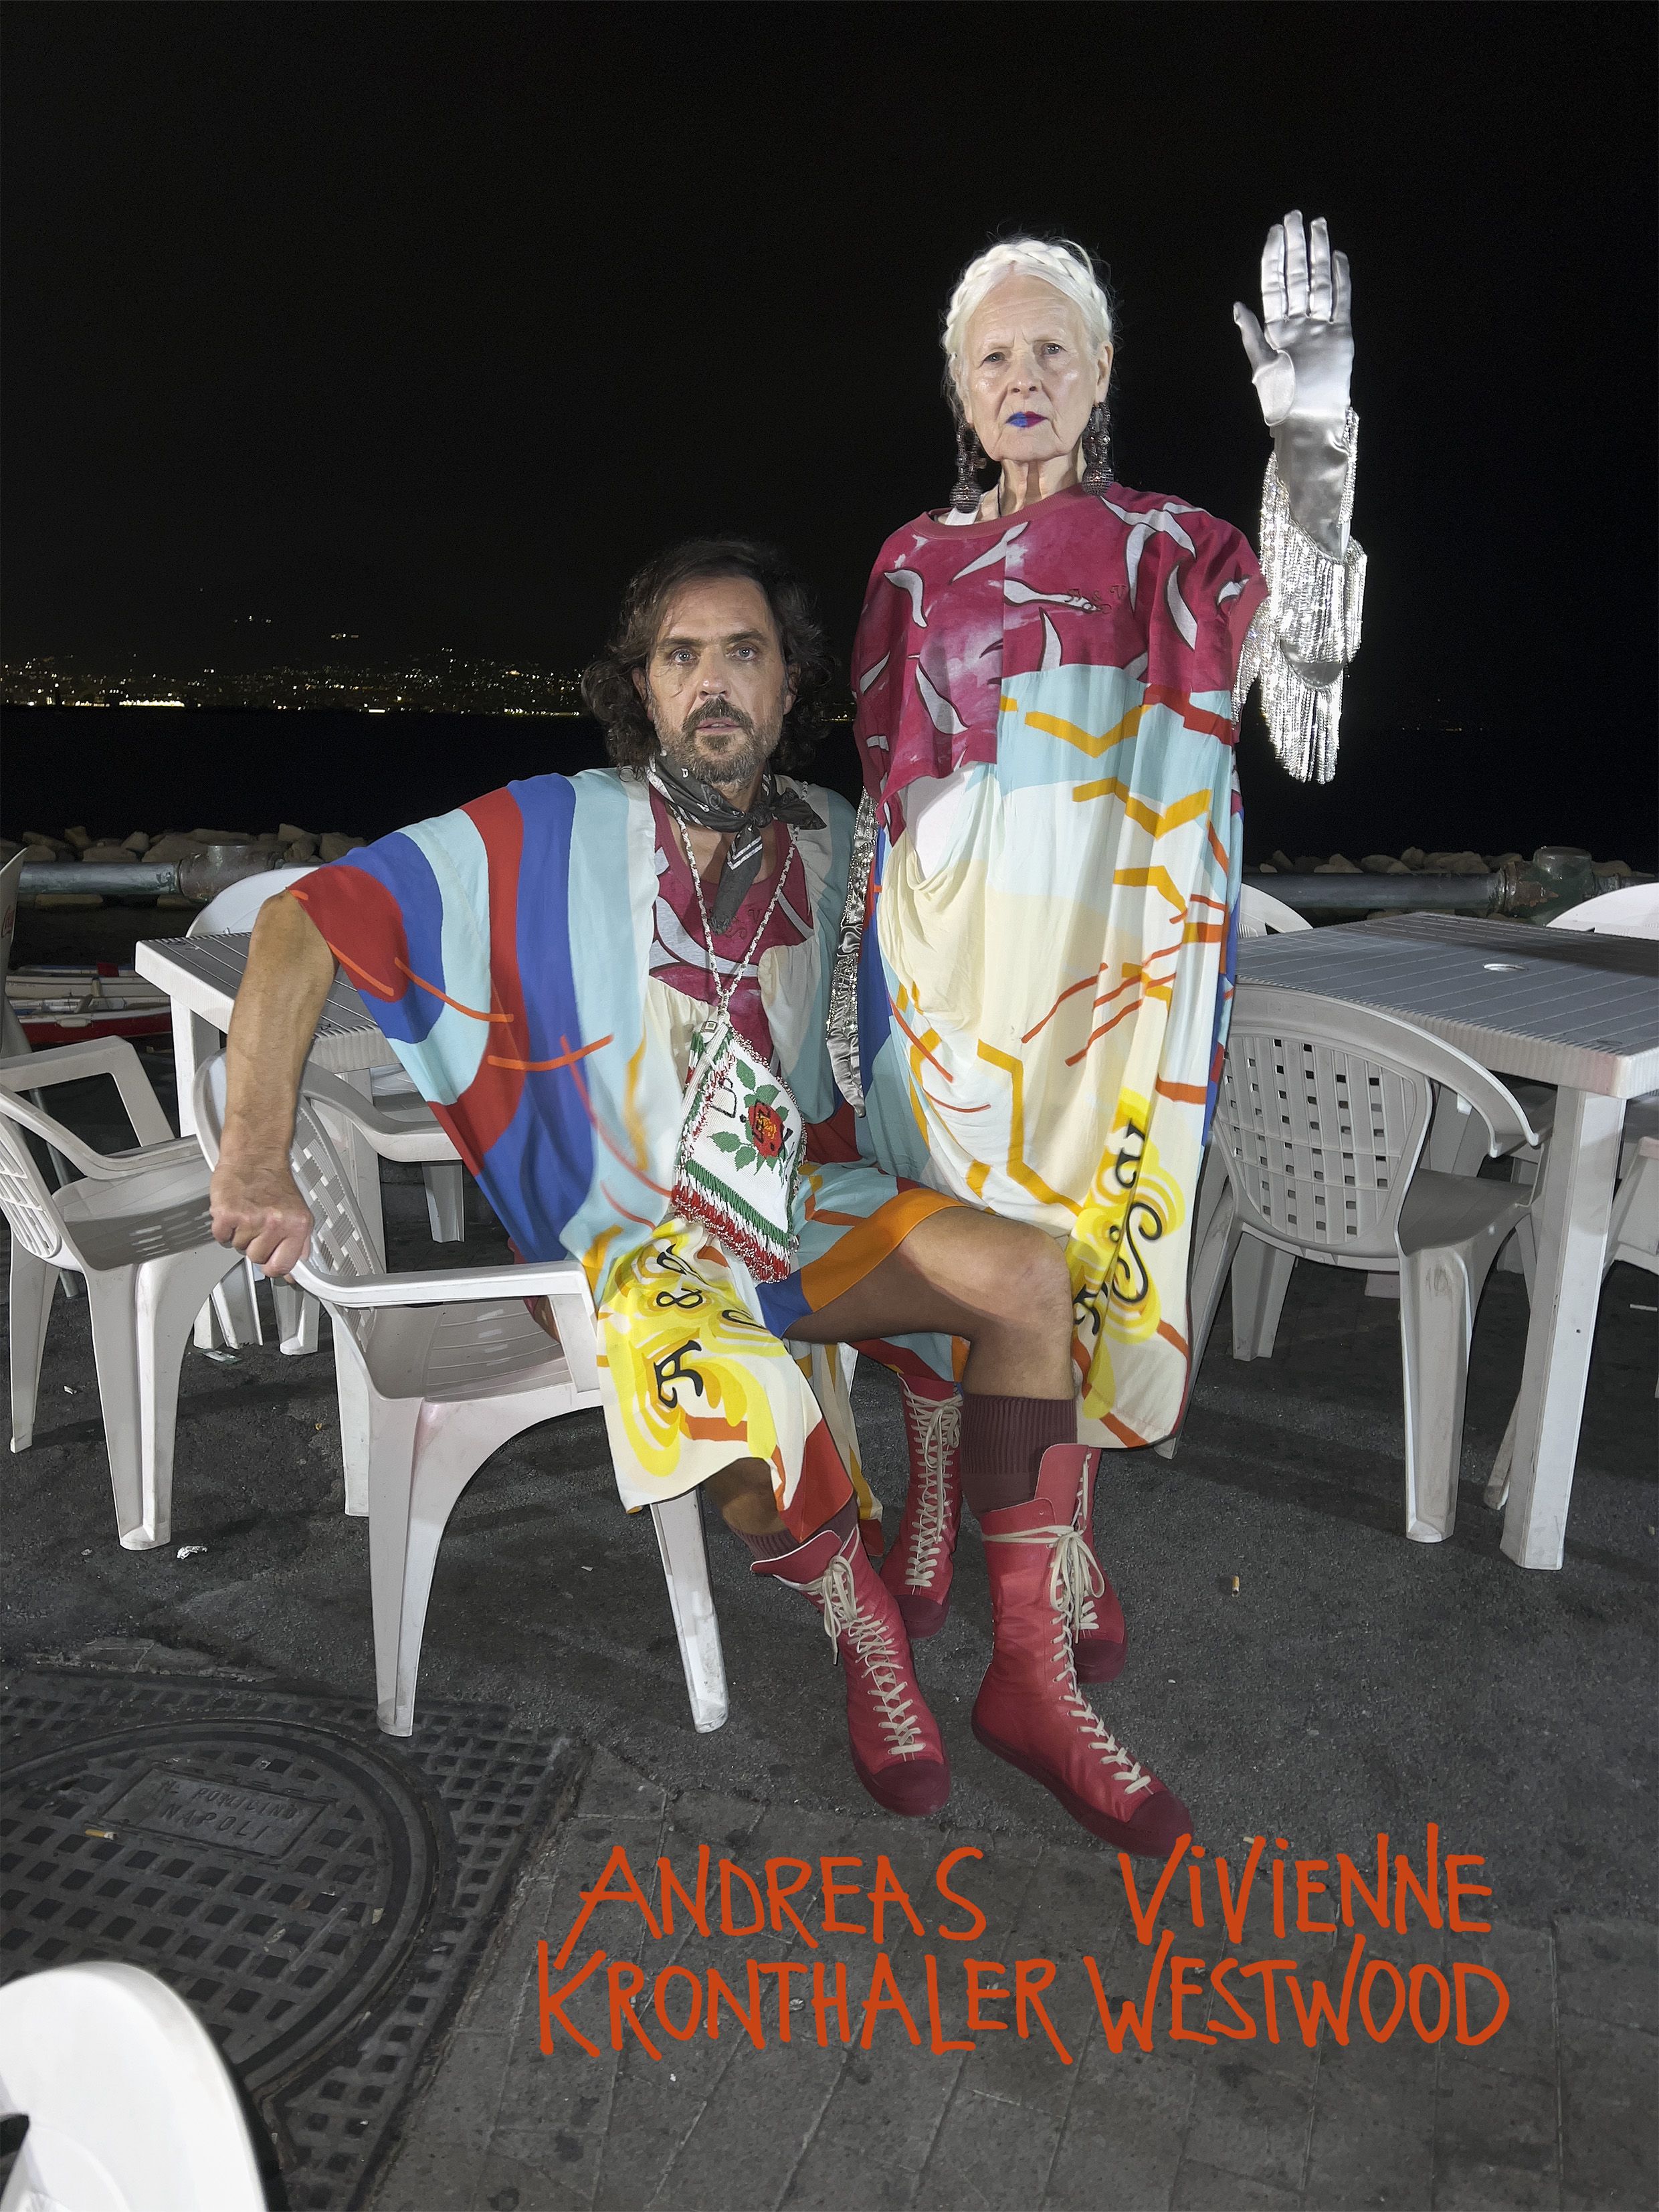 AK for Vivienne Westwood 2022春夏系列广告大片发布